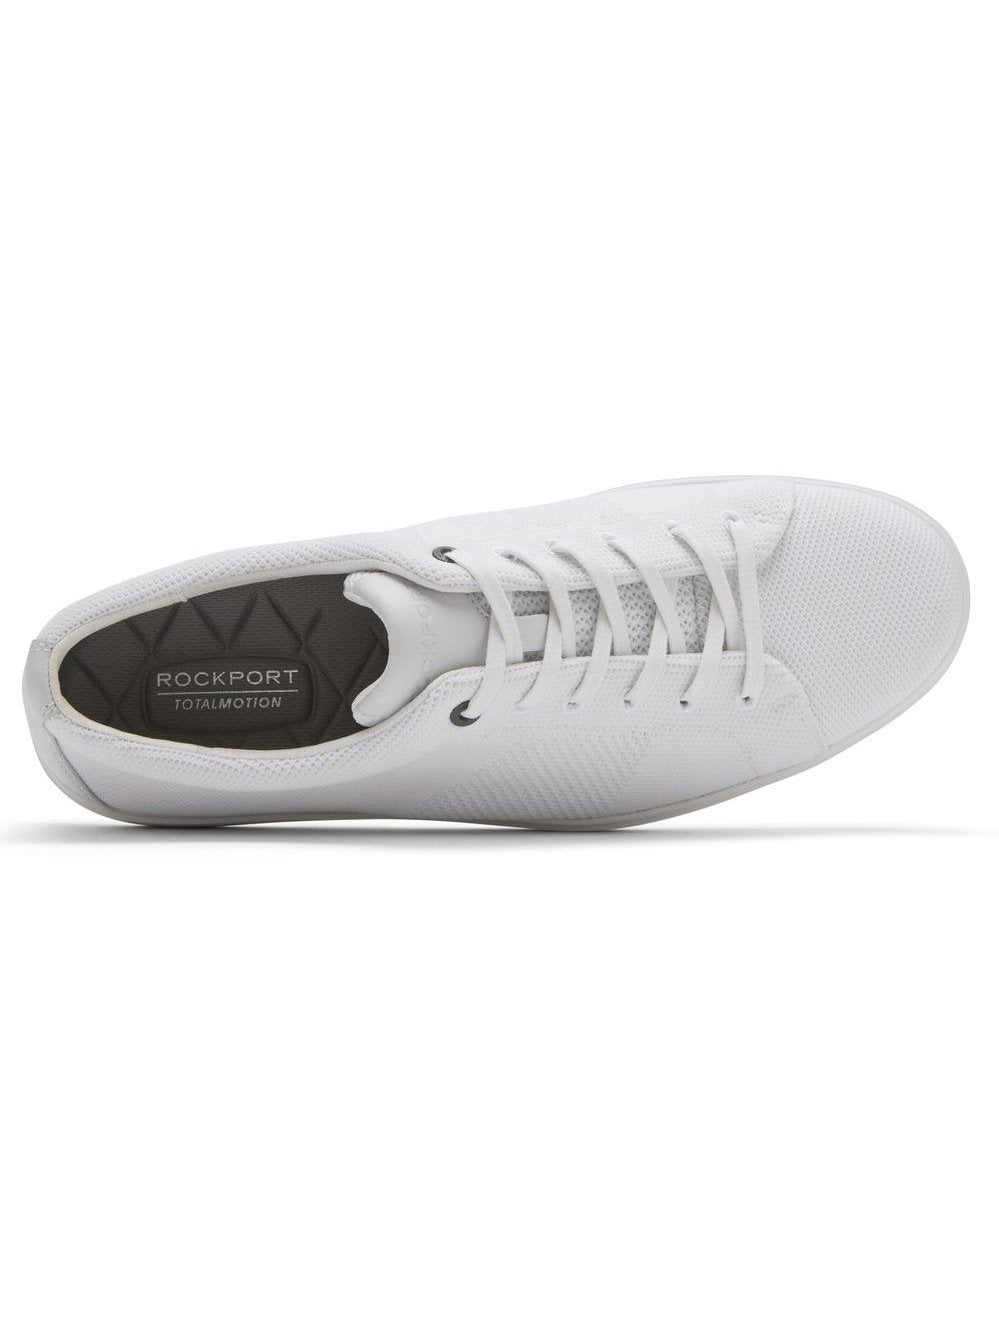 Rockport Mens Total Motion Lite Mesh Sneaker White CI5208.